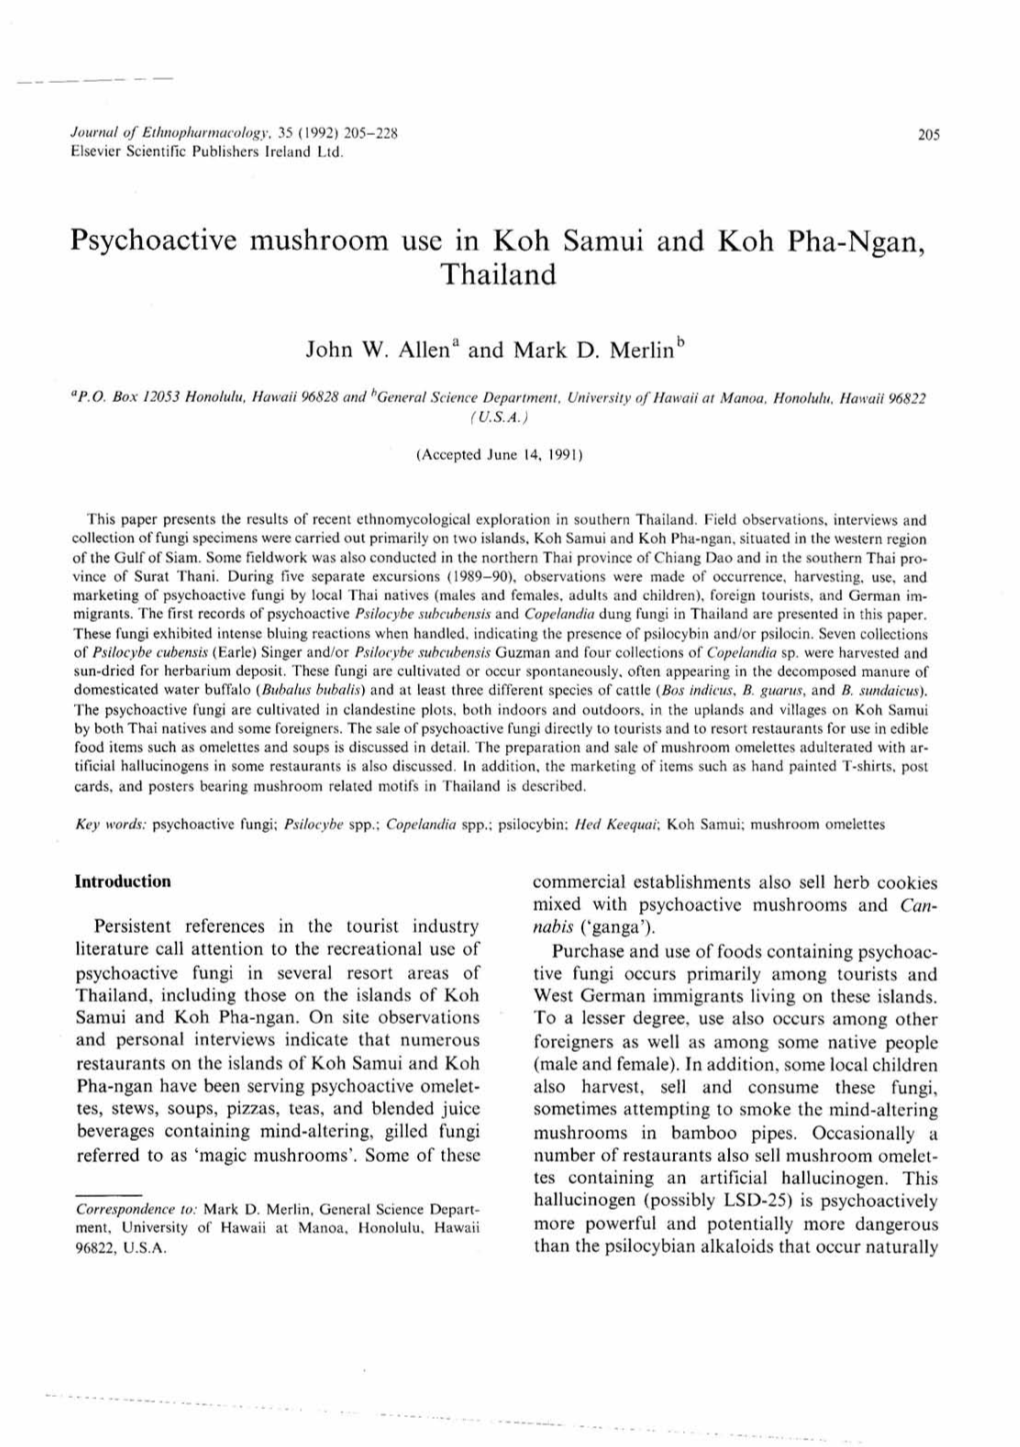 Psychoactive Mushroom Use in Koh Samui and Koh Pha-Ngan, Thailand